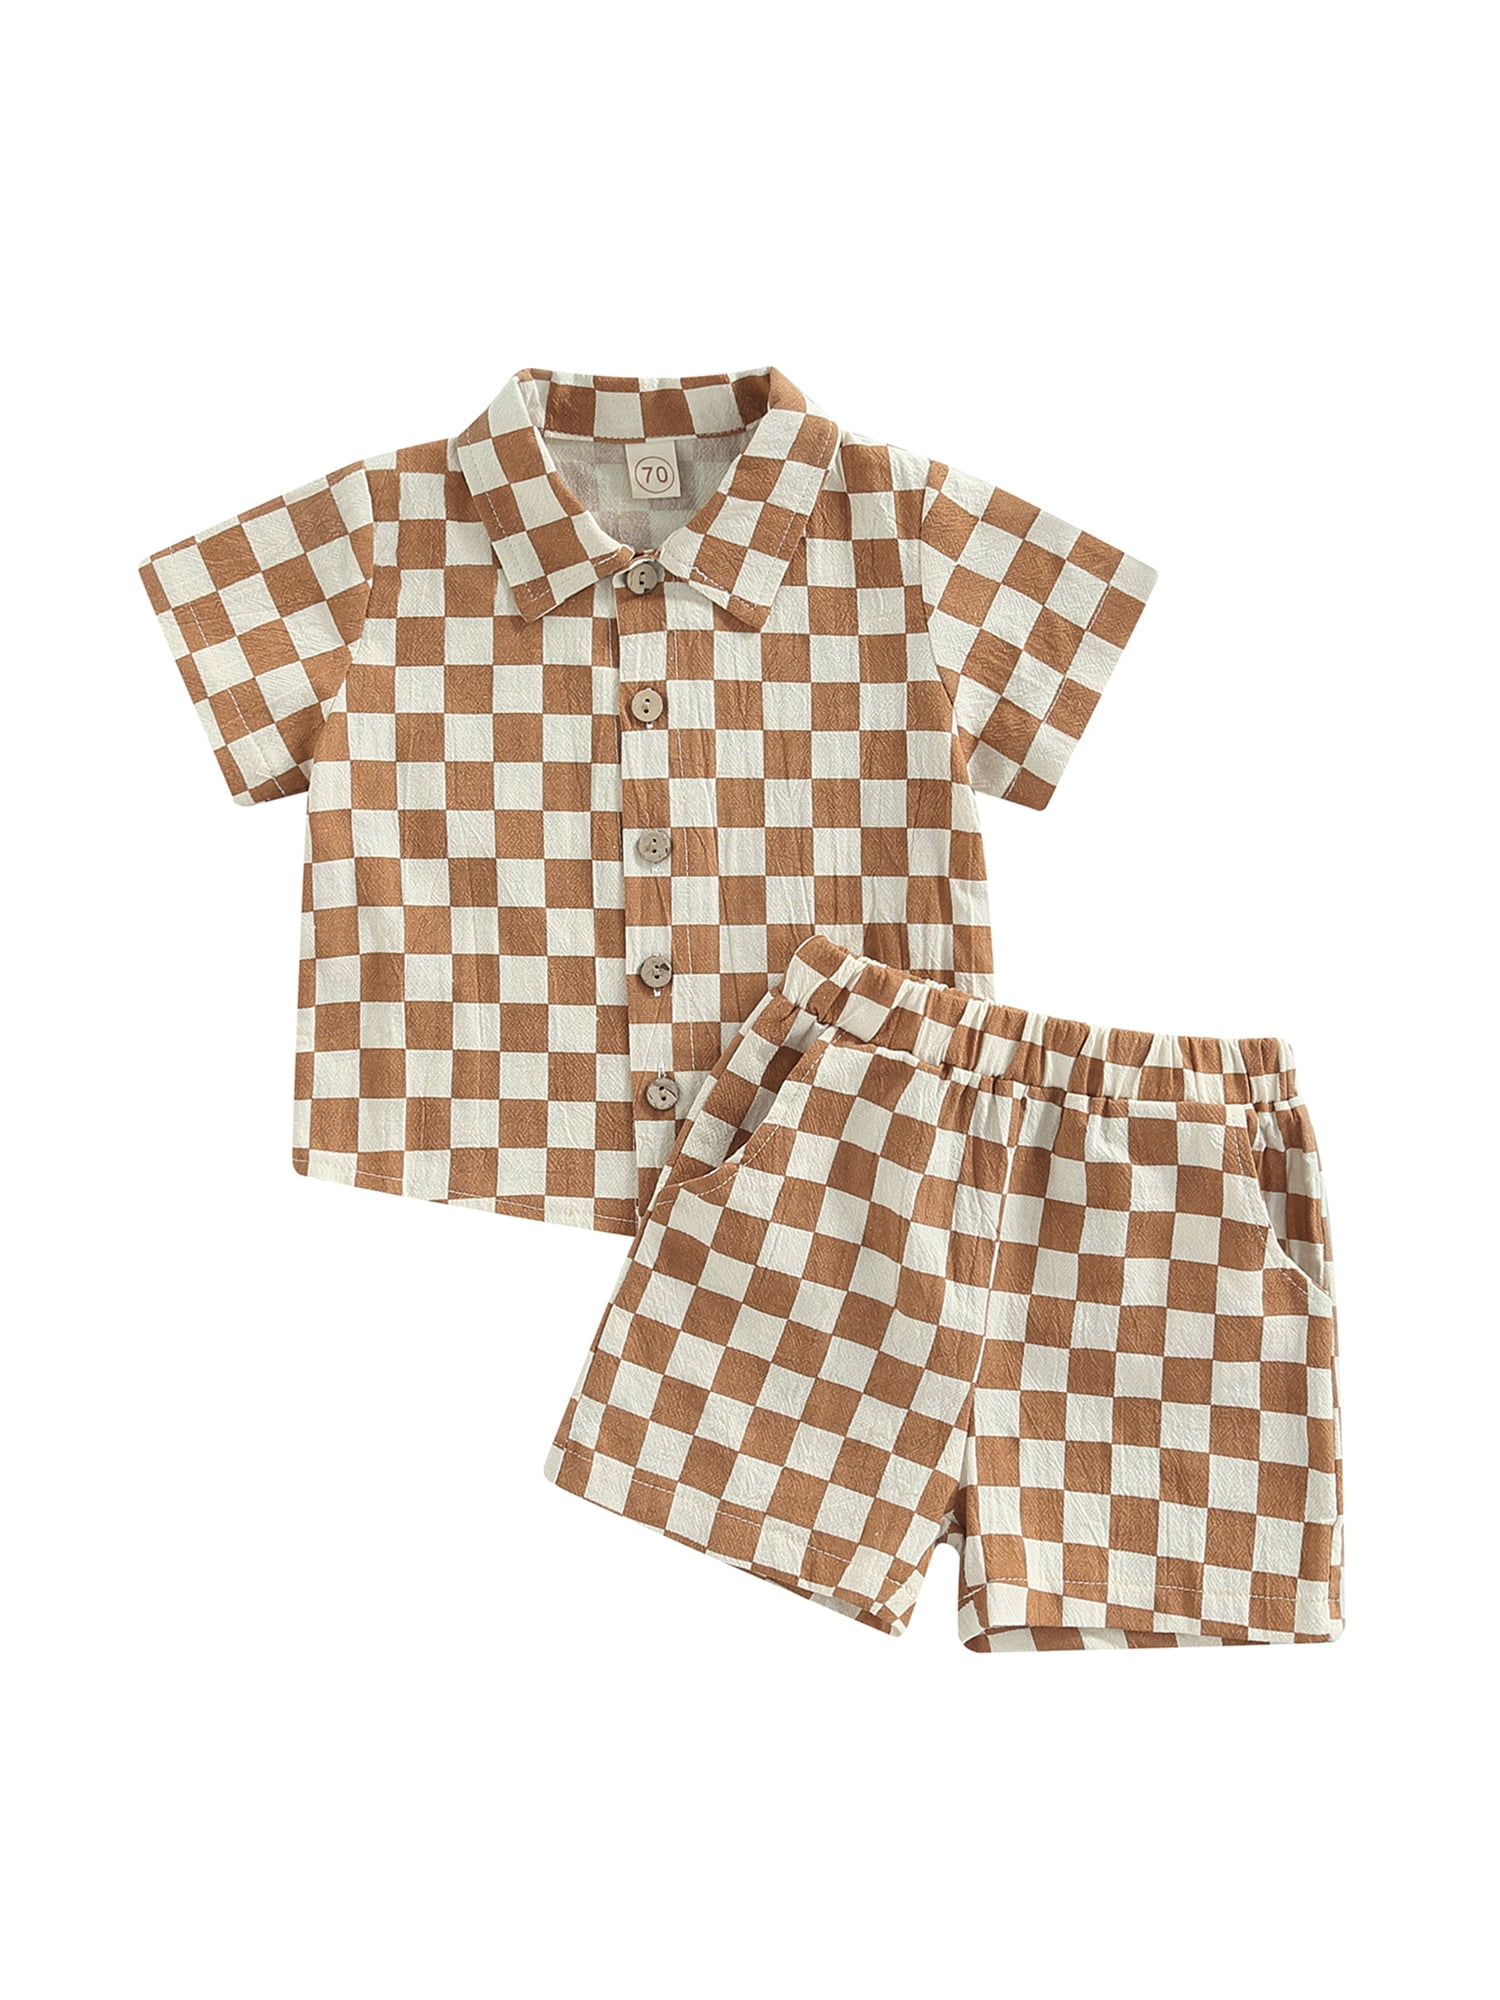 LisenraIn Summer Kids Boys Clothes Sets Plaid Print Short Sleeve T-shirts  Pocket Shorts Beach Outfits